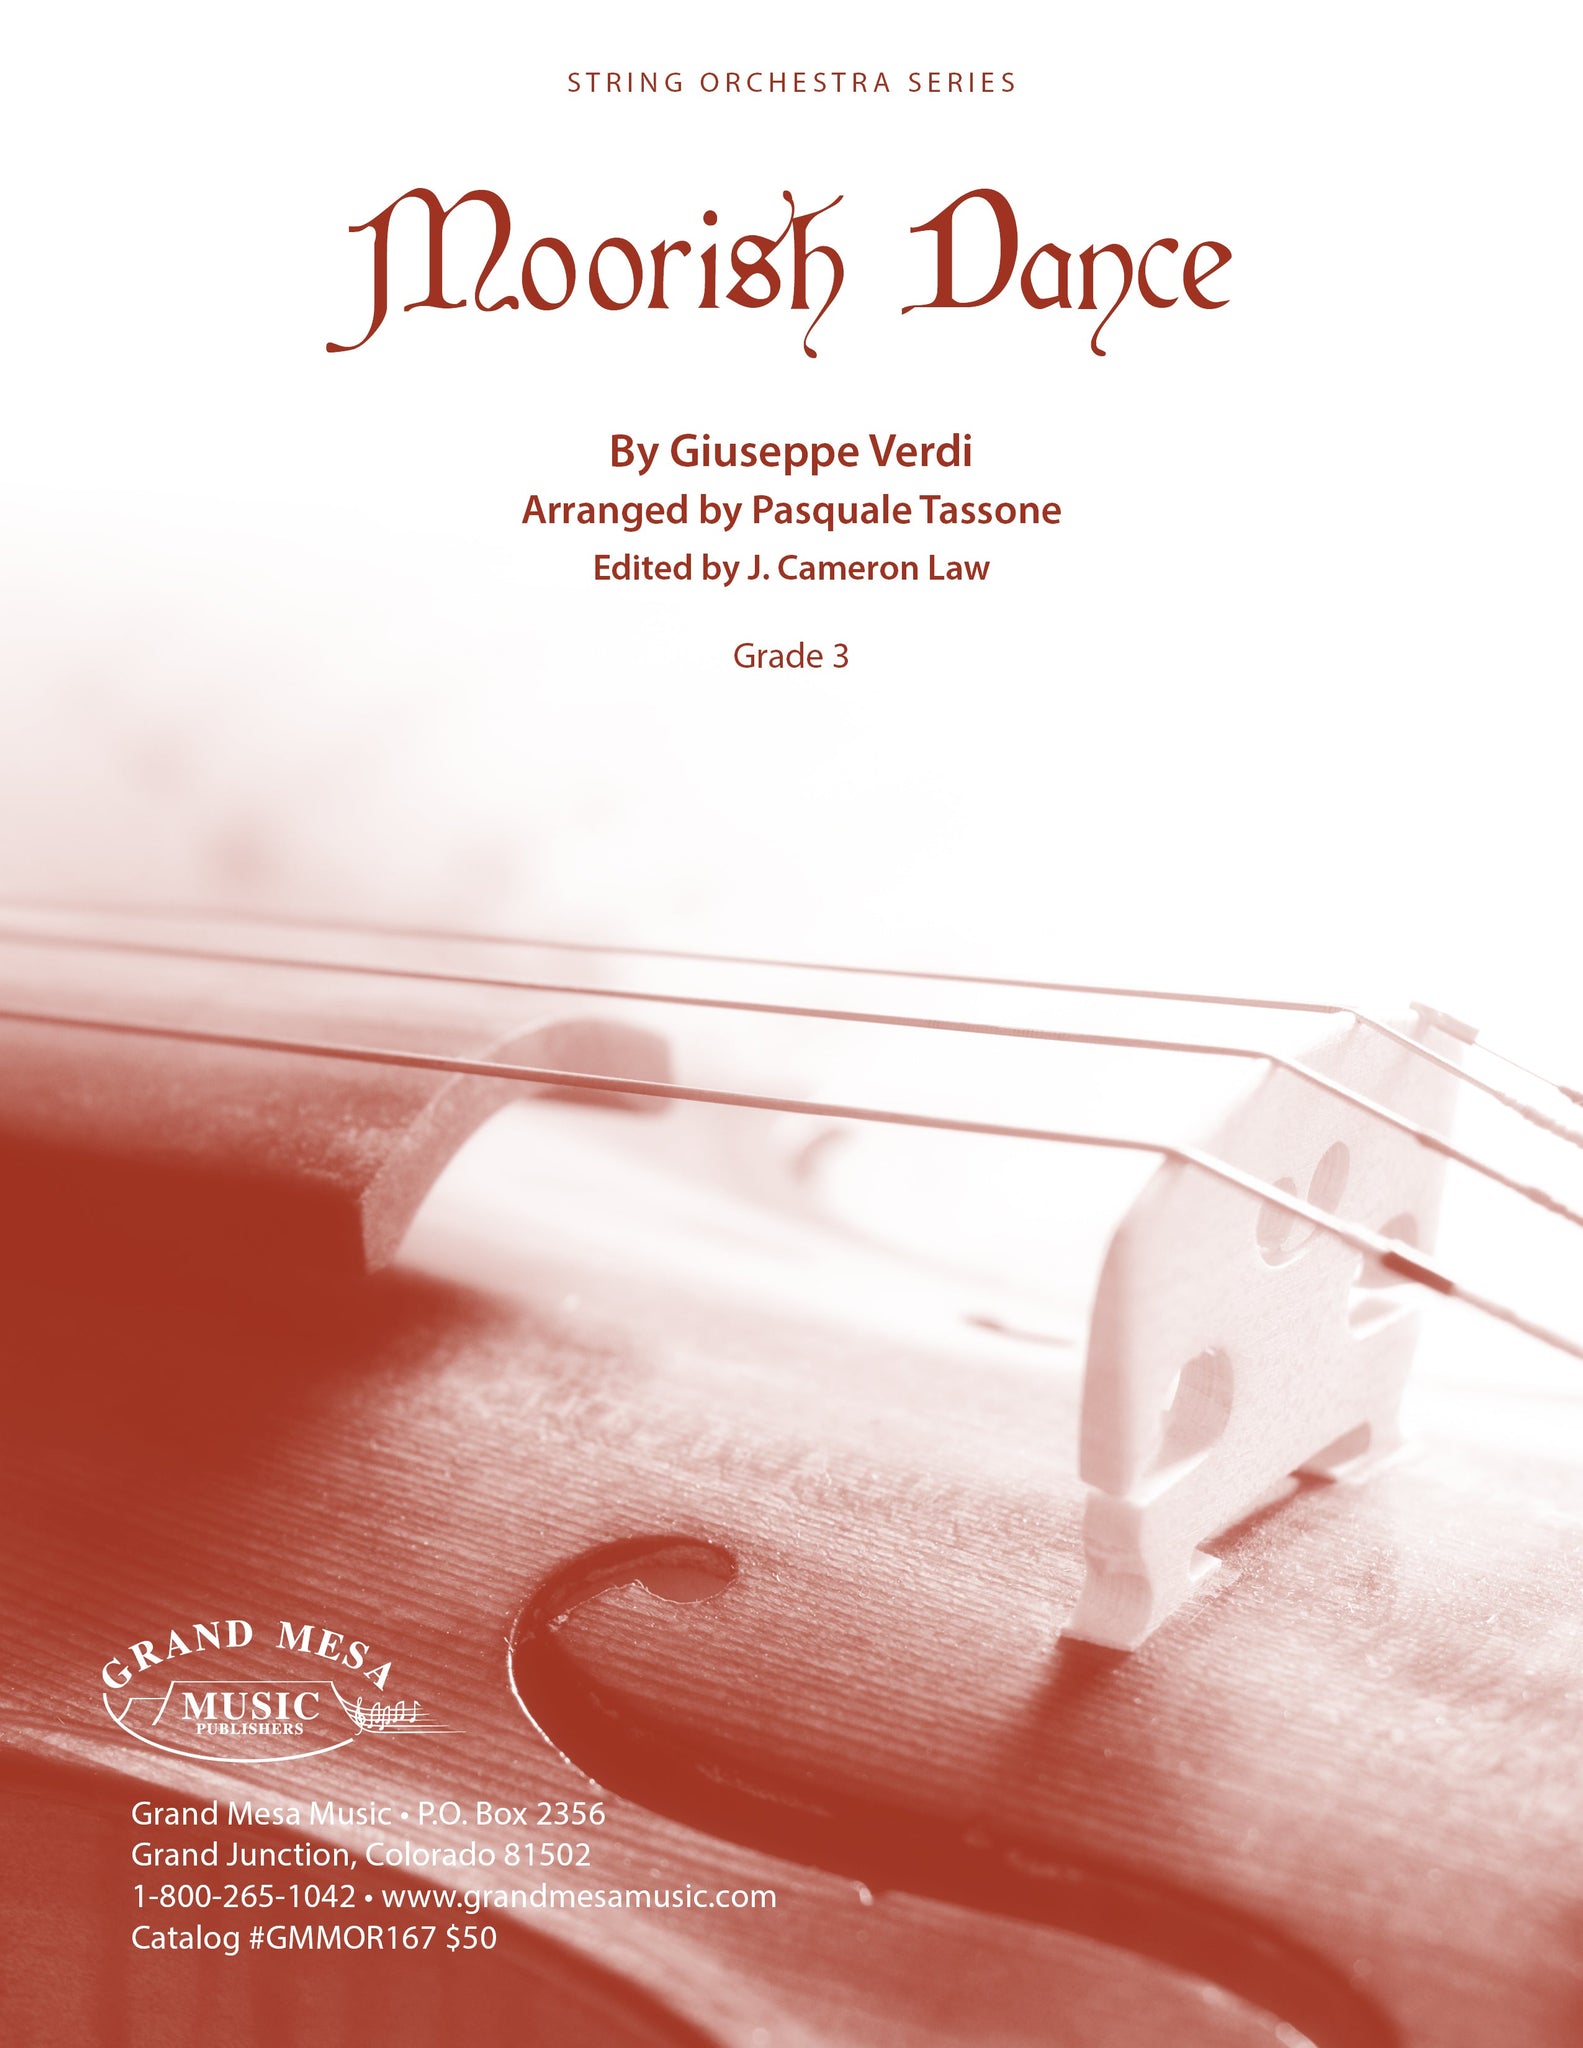 Strings sheet music cover of Moorish Dance, composed by Giuseppe Verdi, arranged by Pasquale Tassone.